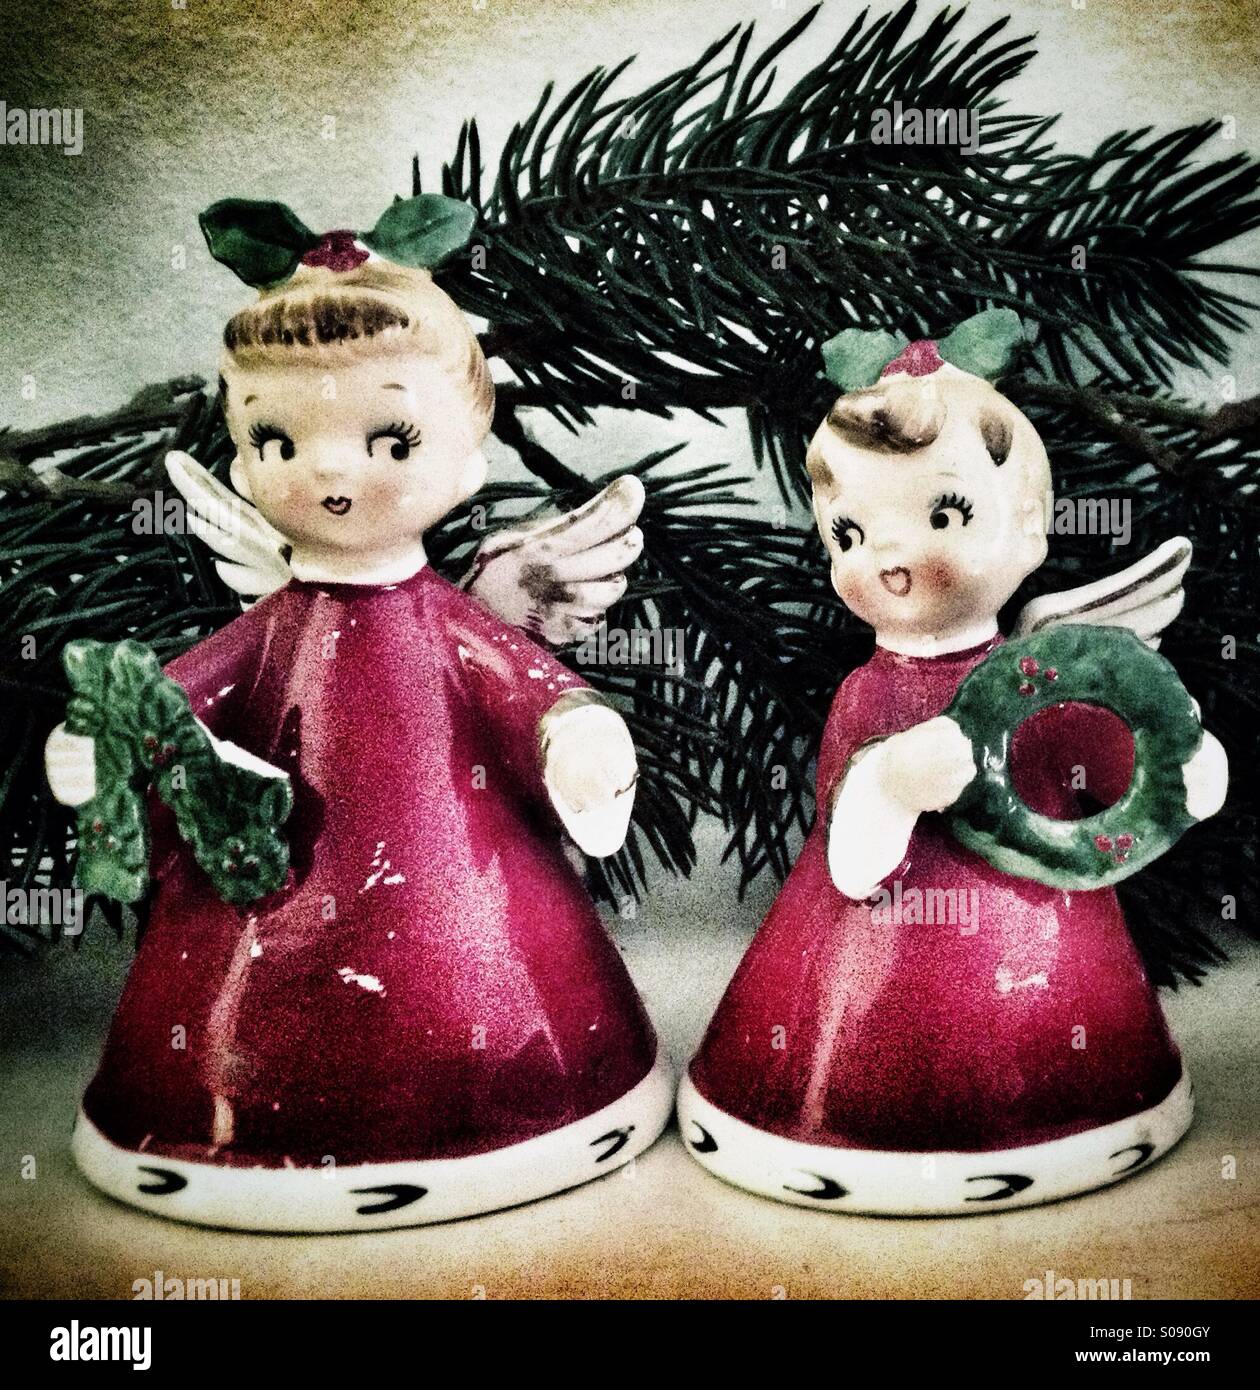 Kitsch vintage Christmas angel ornaments Stock Photo